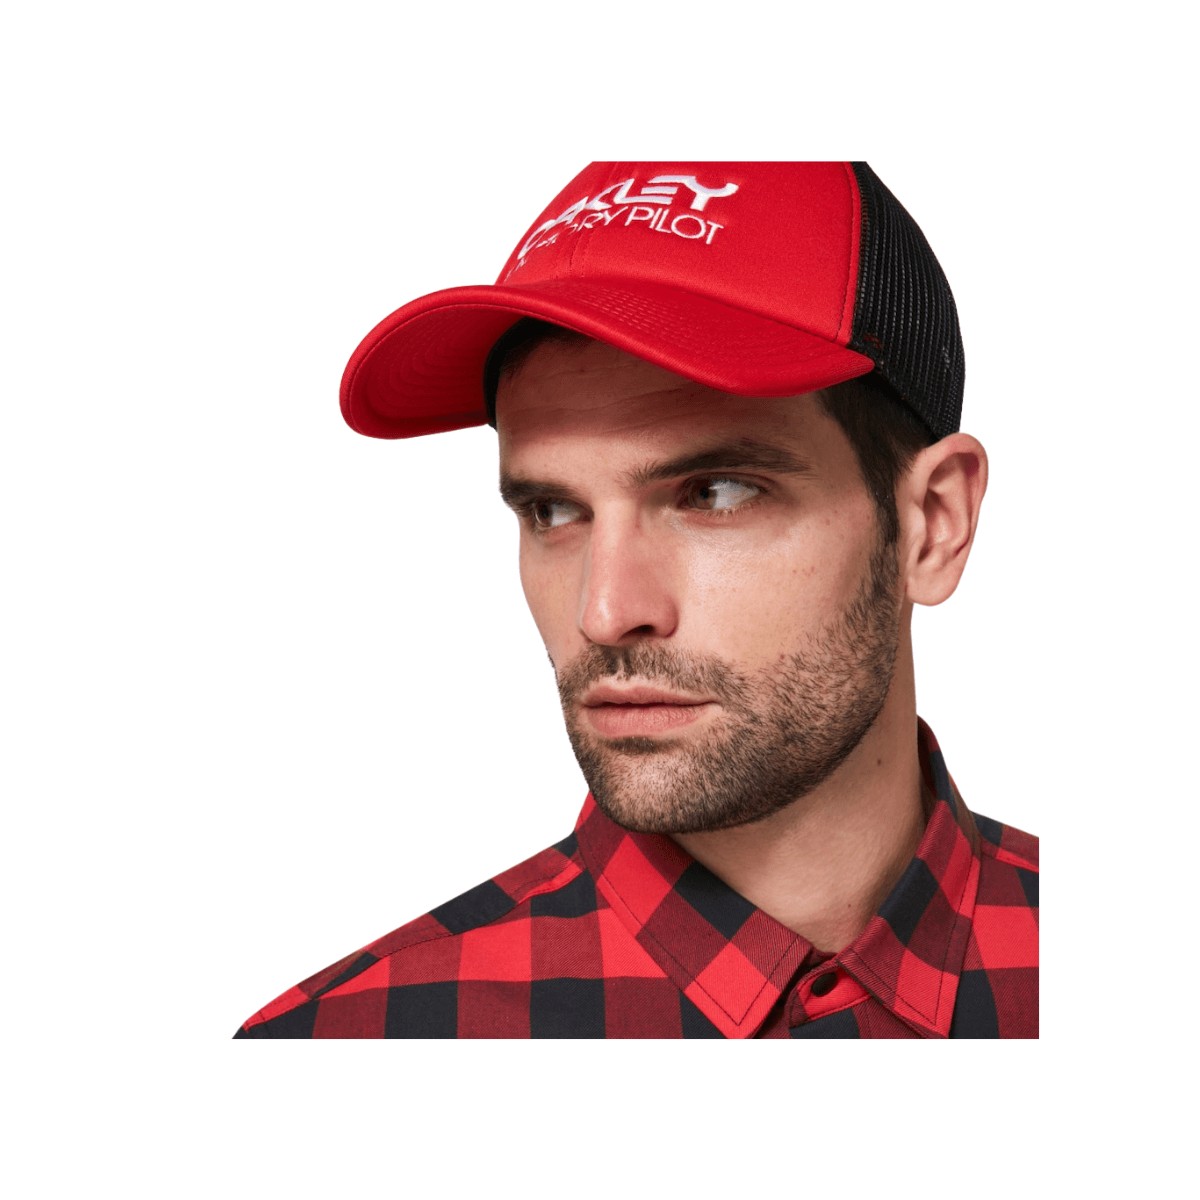 Oakley Factory Pilot Trucker Hat Red Cap